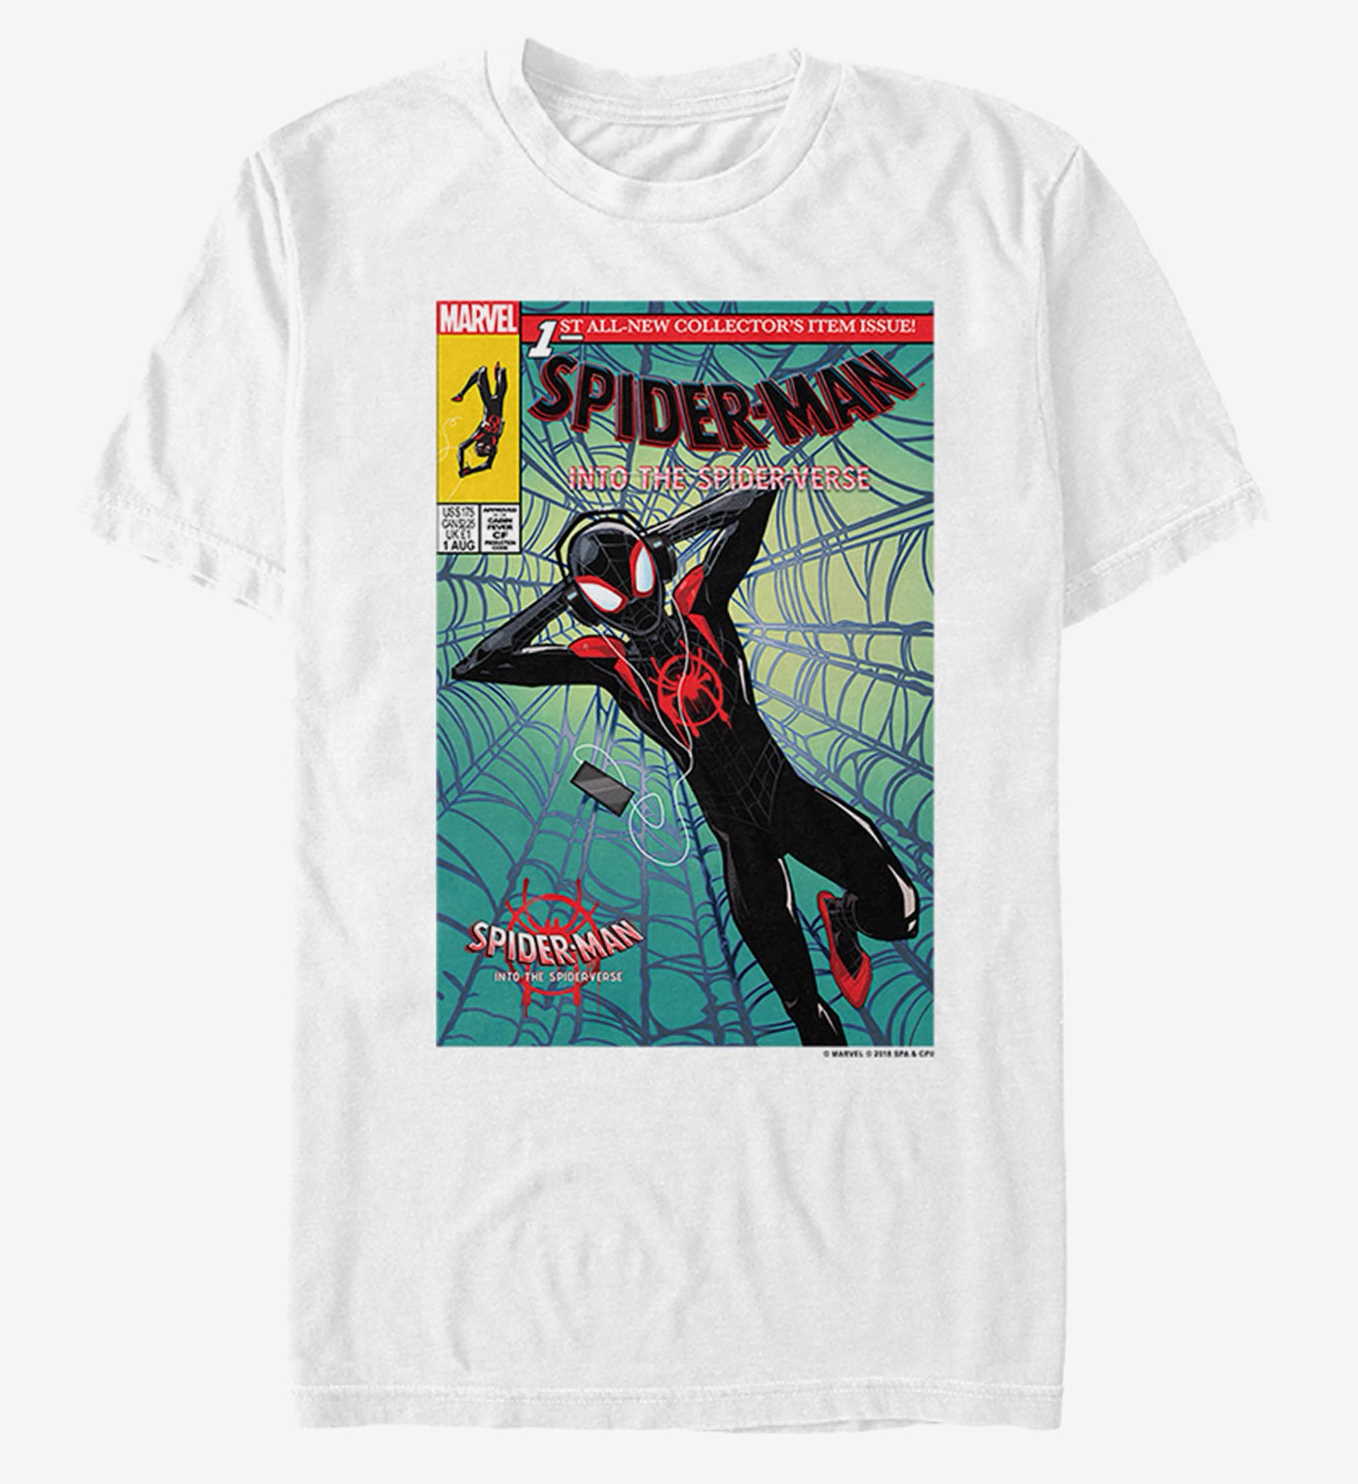 spiderman-spider-verse-shirt-match-jordan-1-origin-story-10